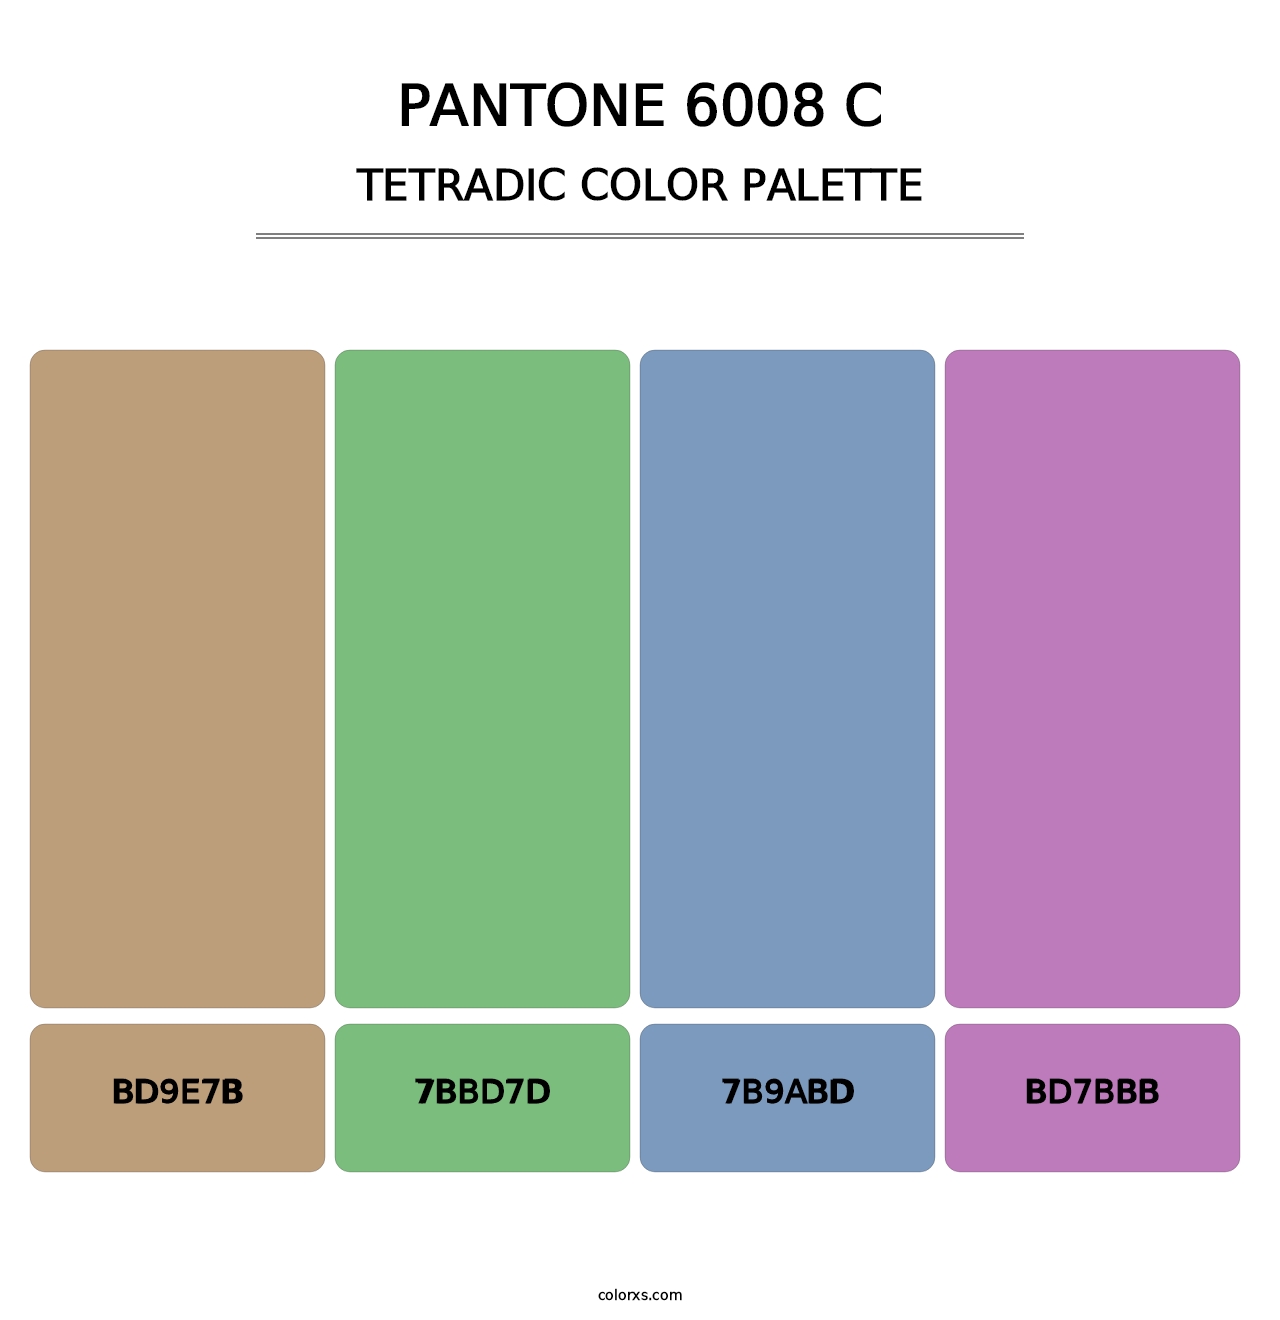 PANTONE 6008 C - Tetradic Color Palette